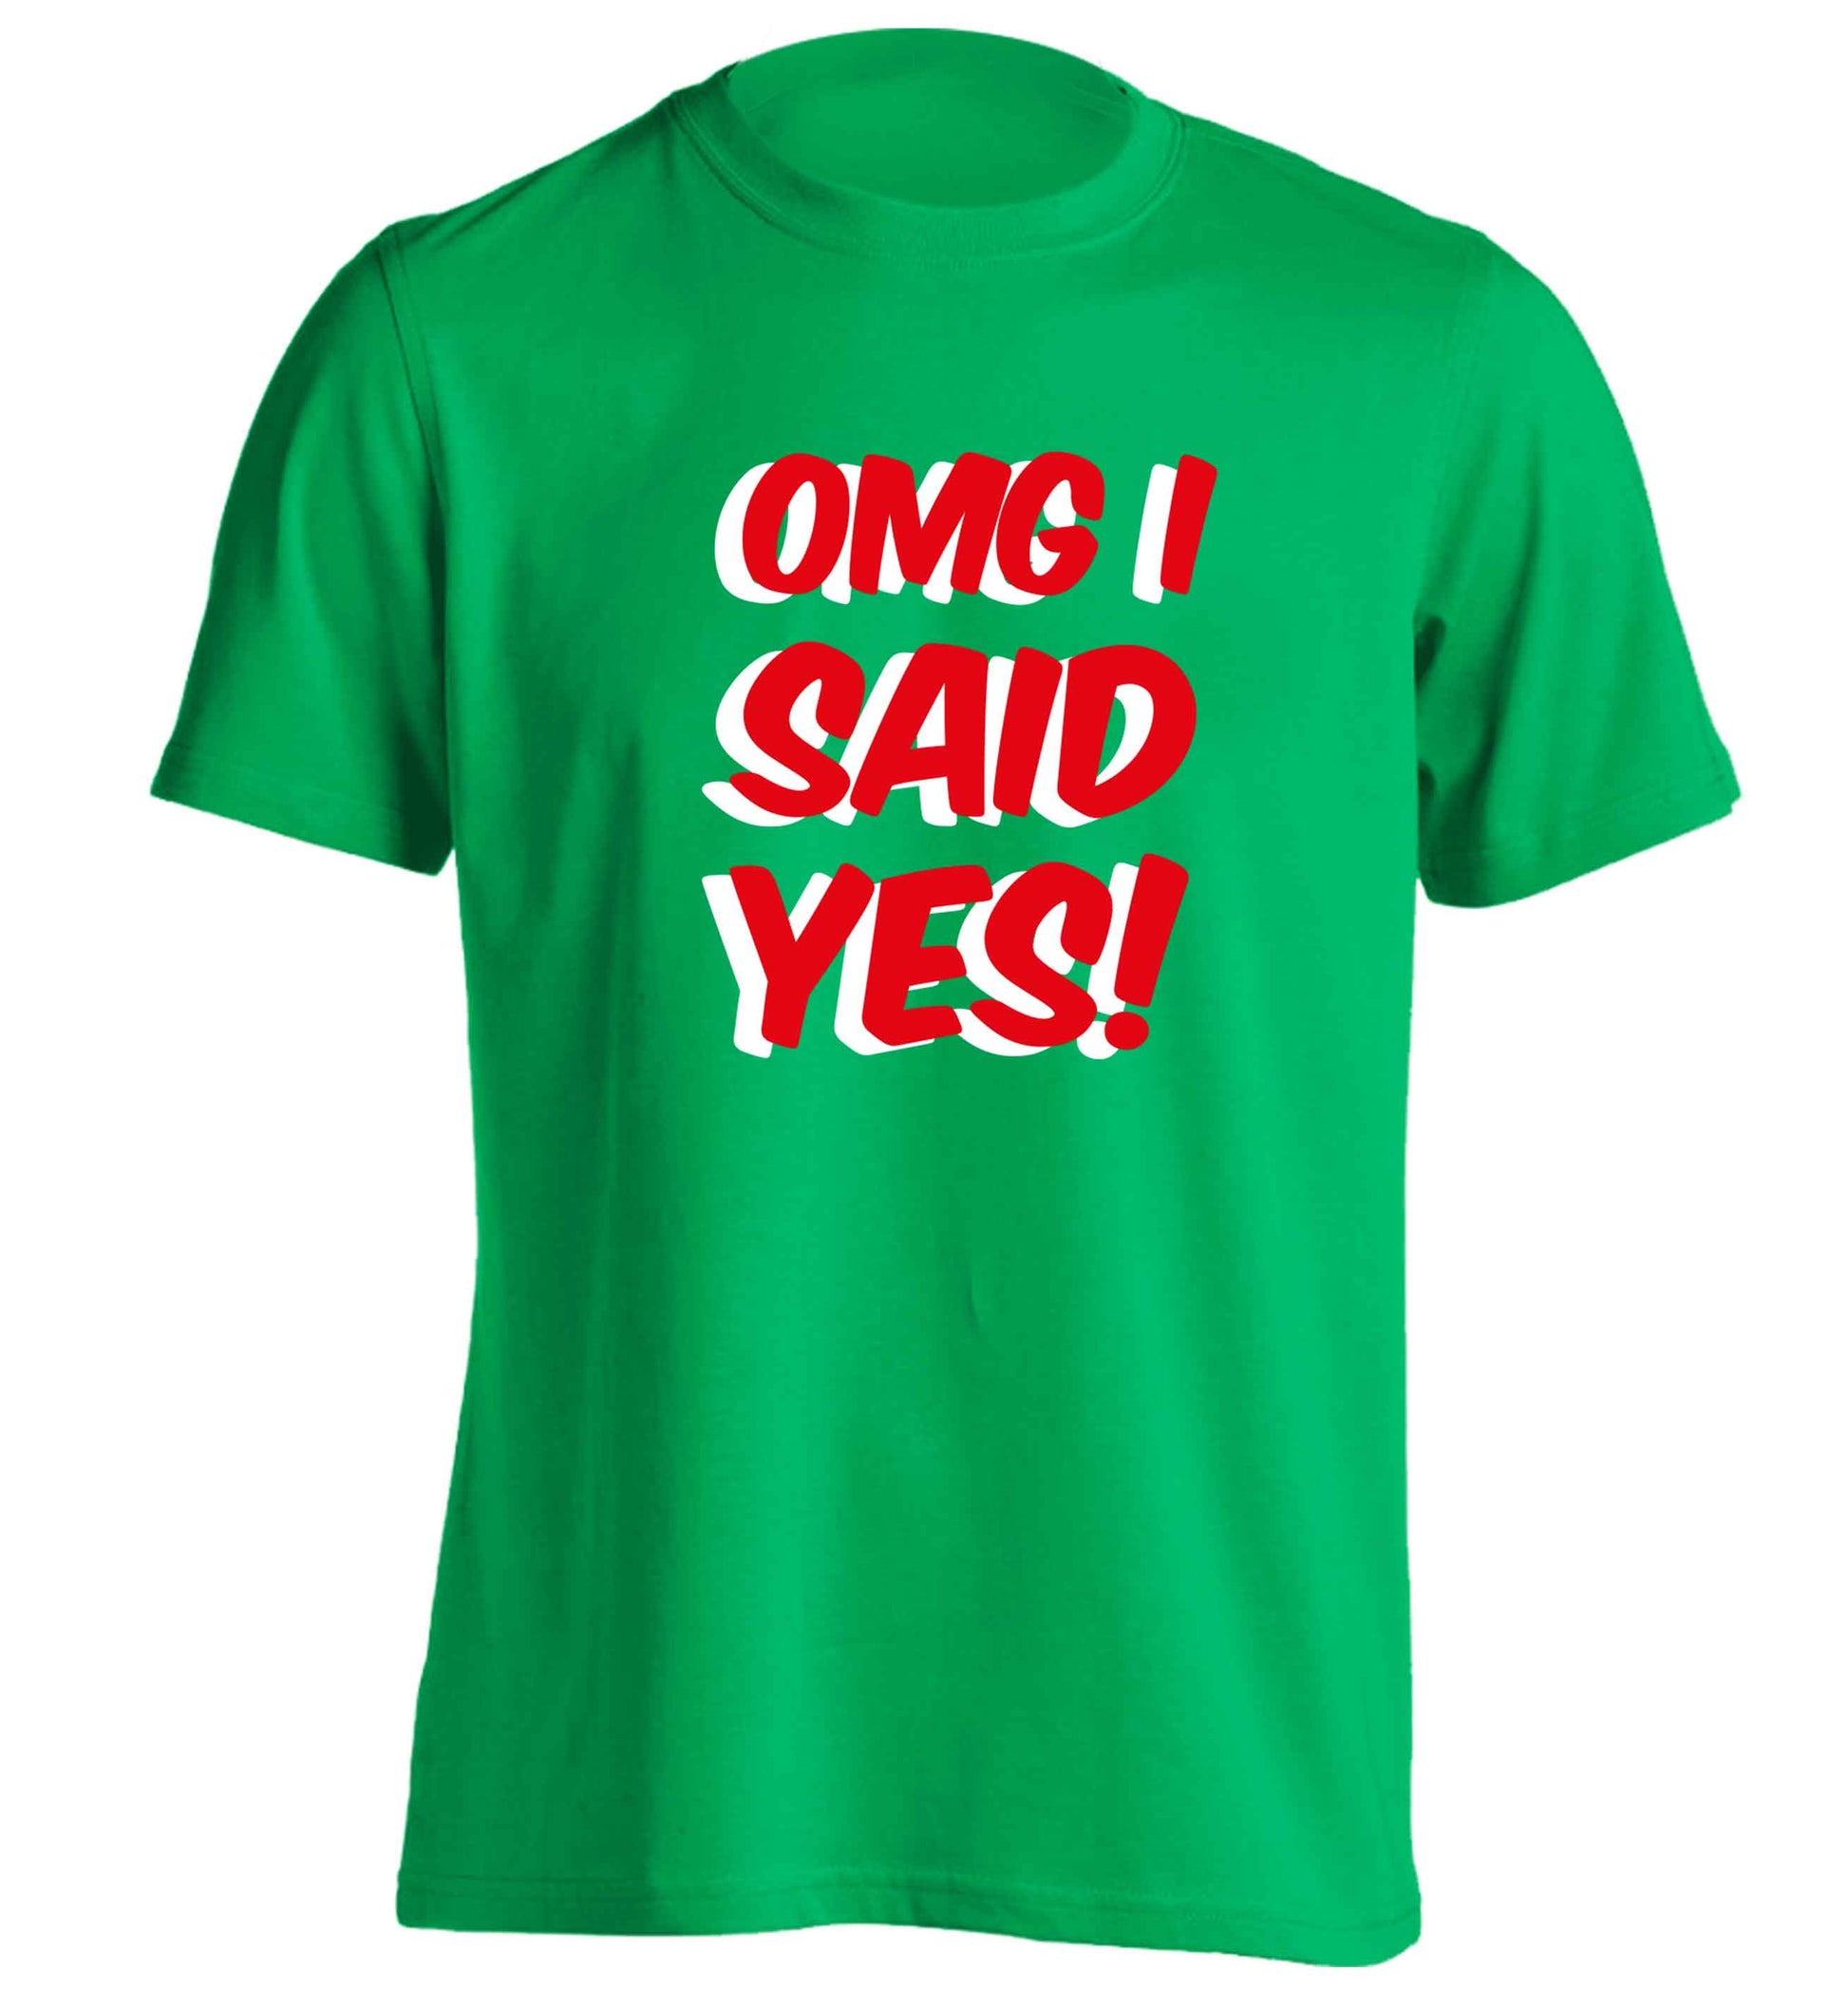 Omg I said yes adults unisex green Tshirt 2XL